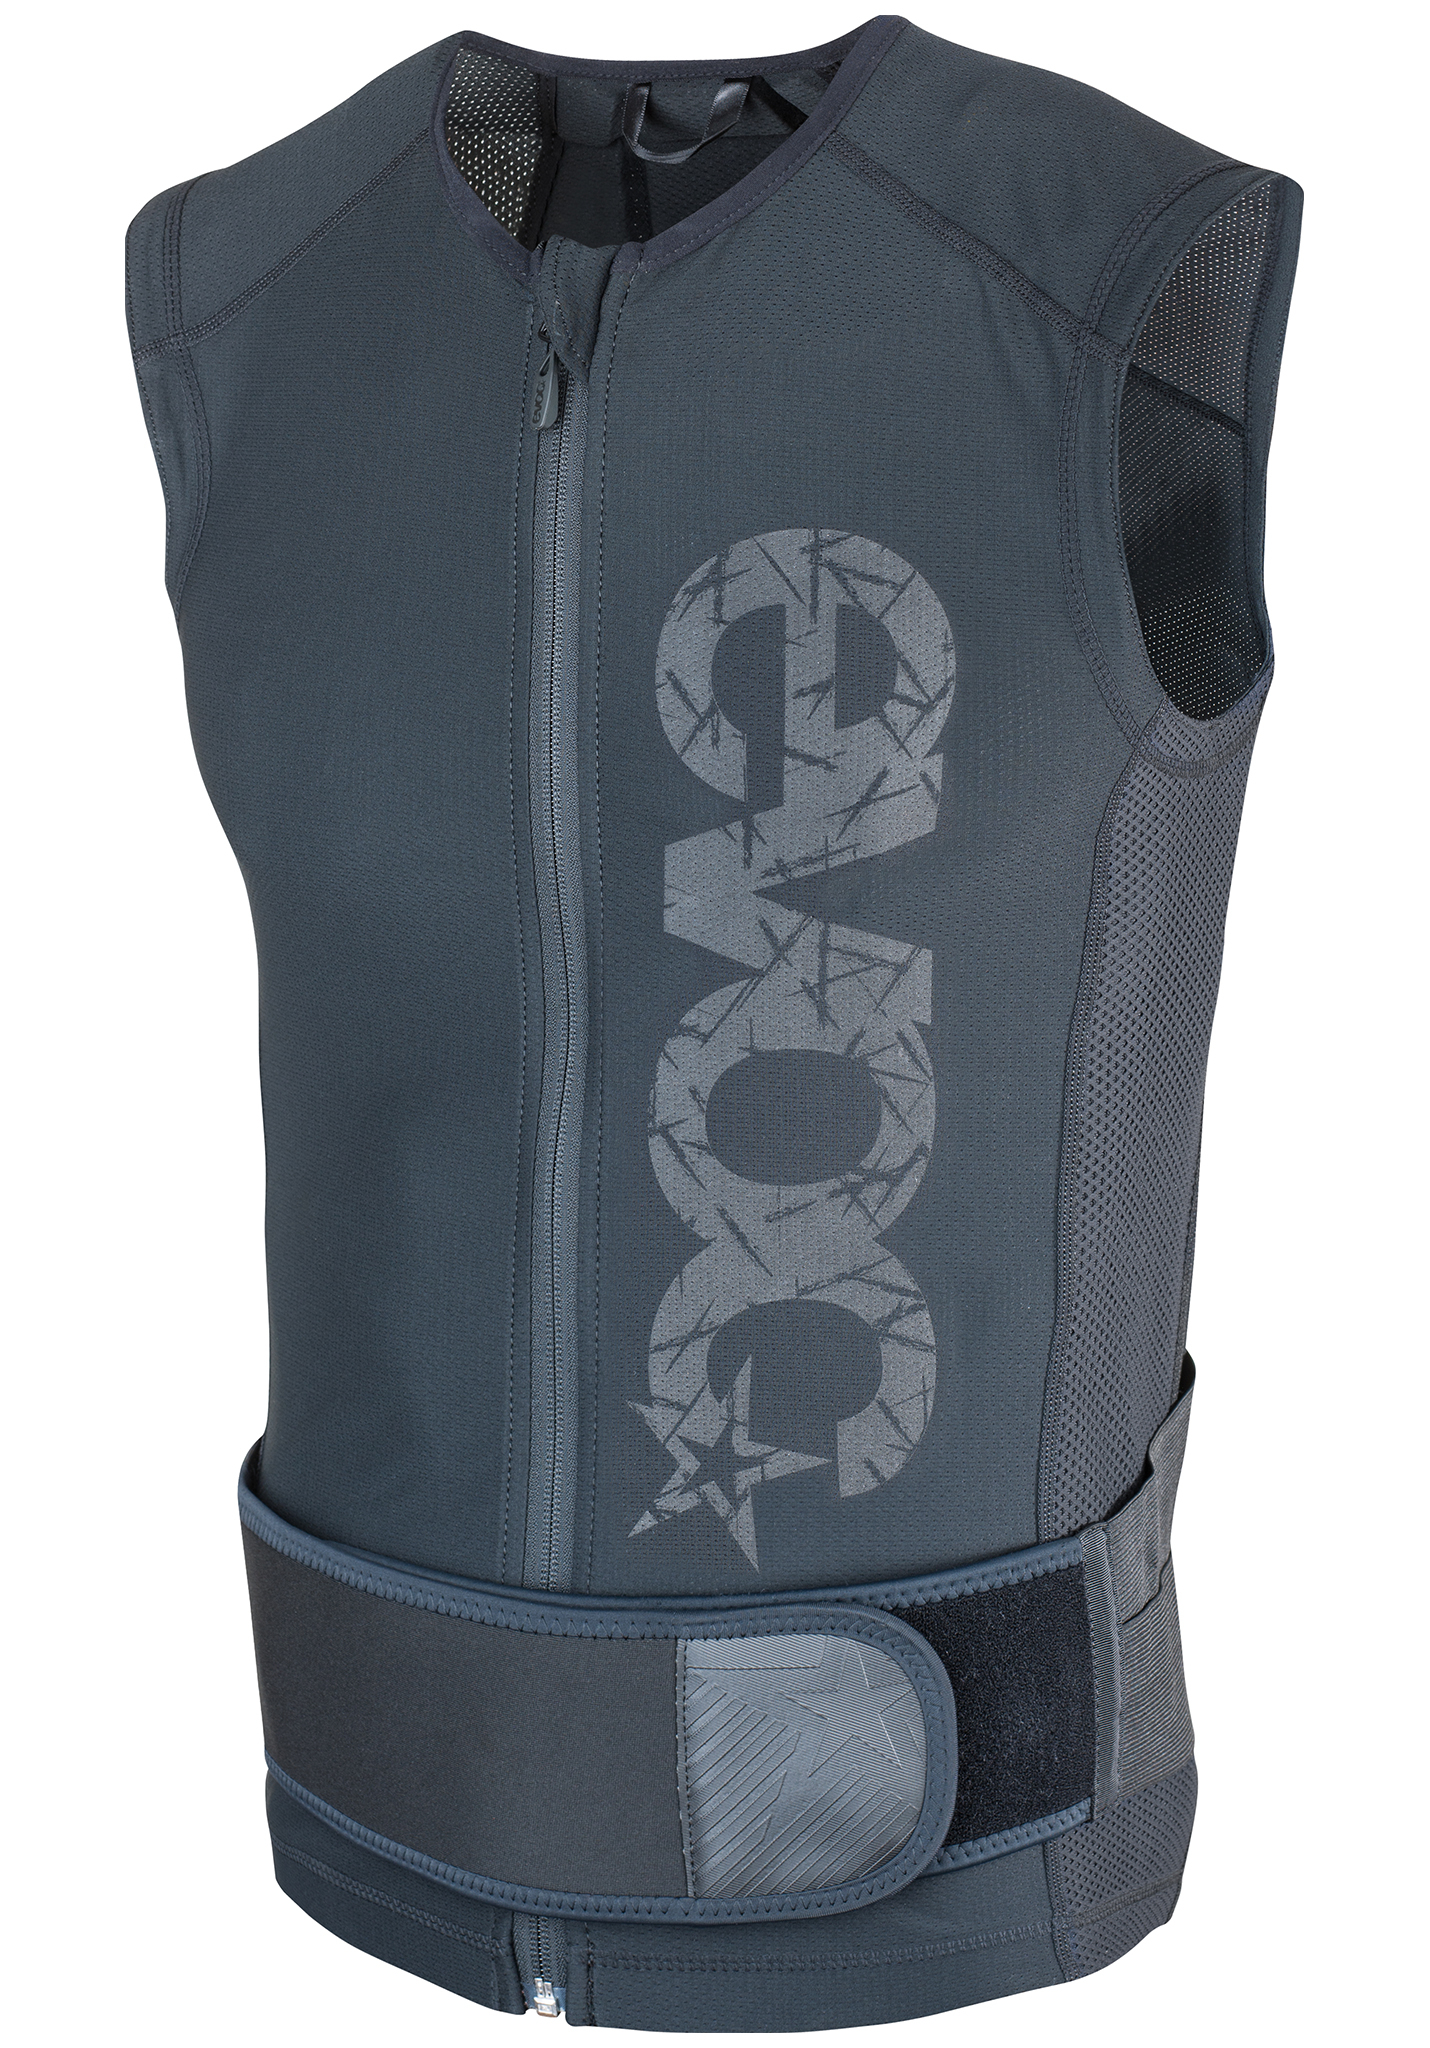 Evoc Protector Vest Lite Snowboard Protektoren black XL